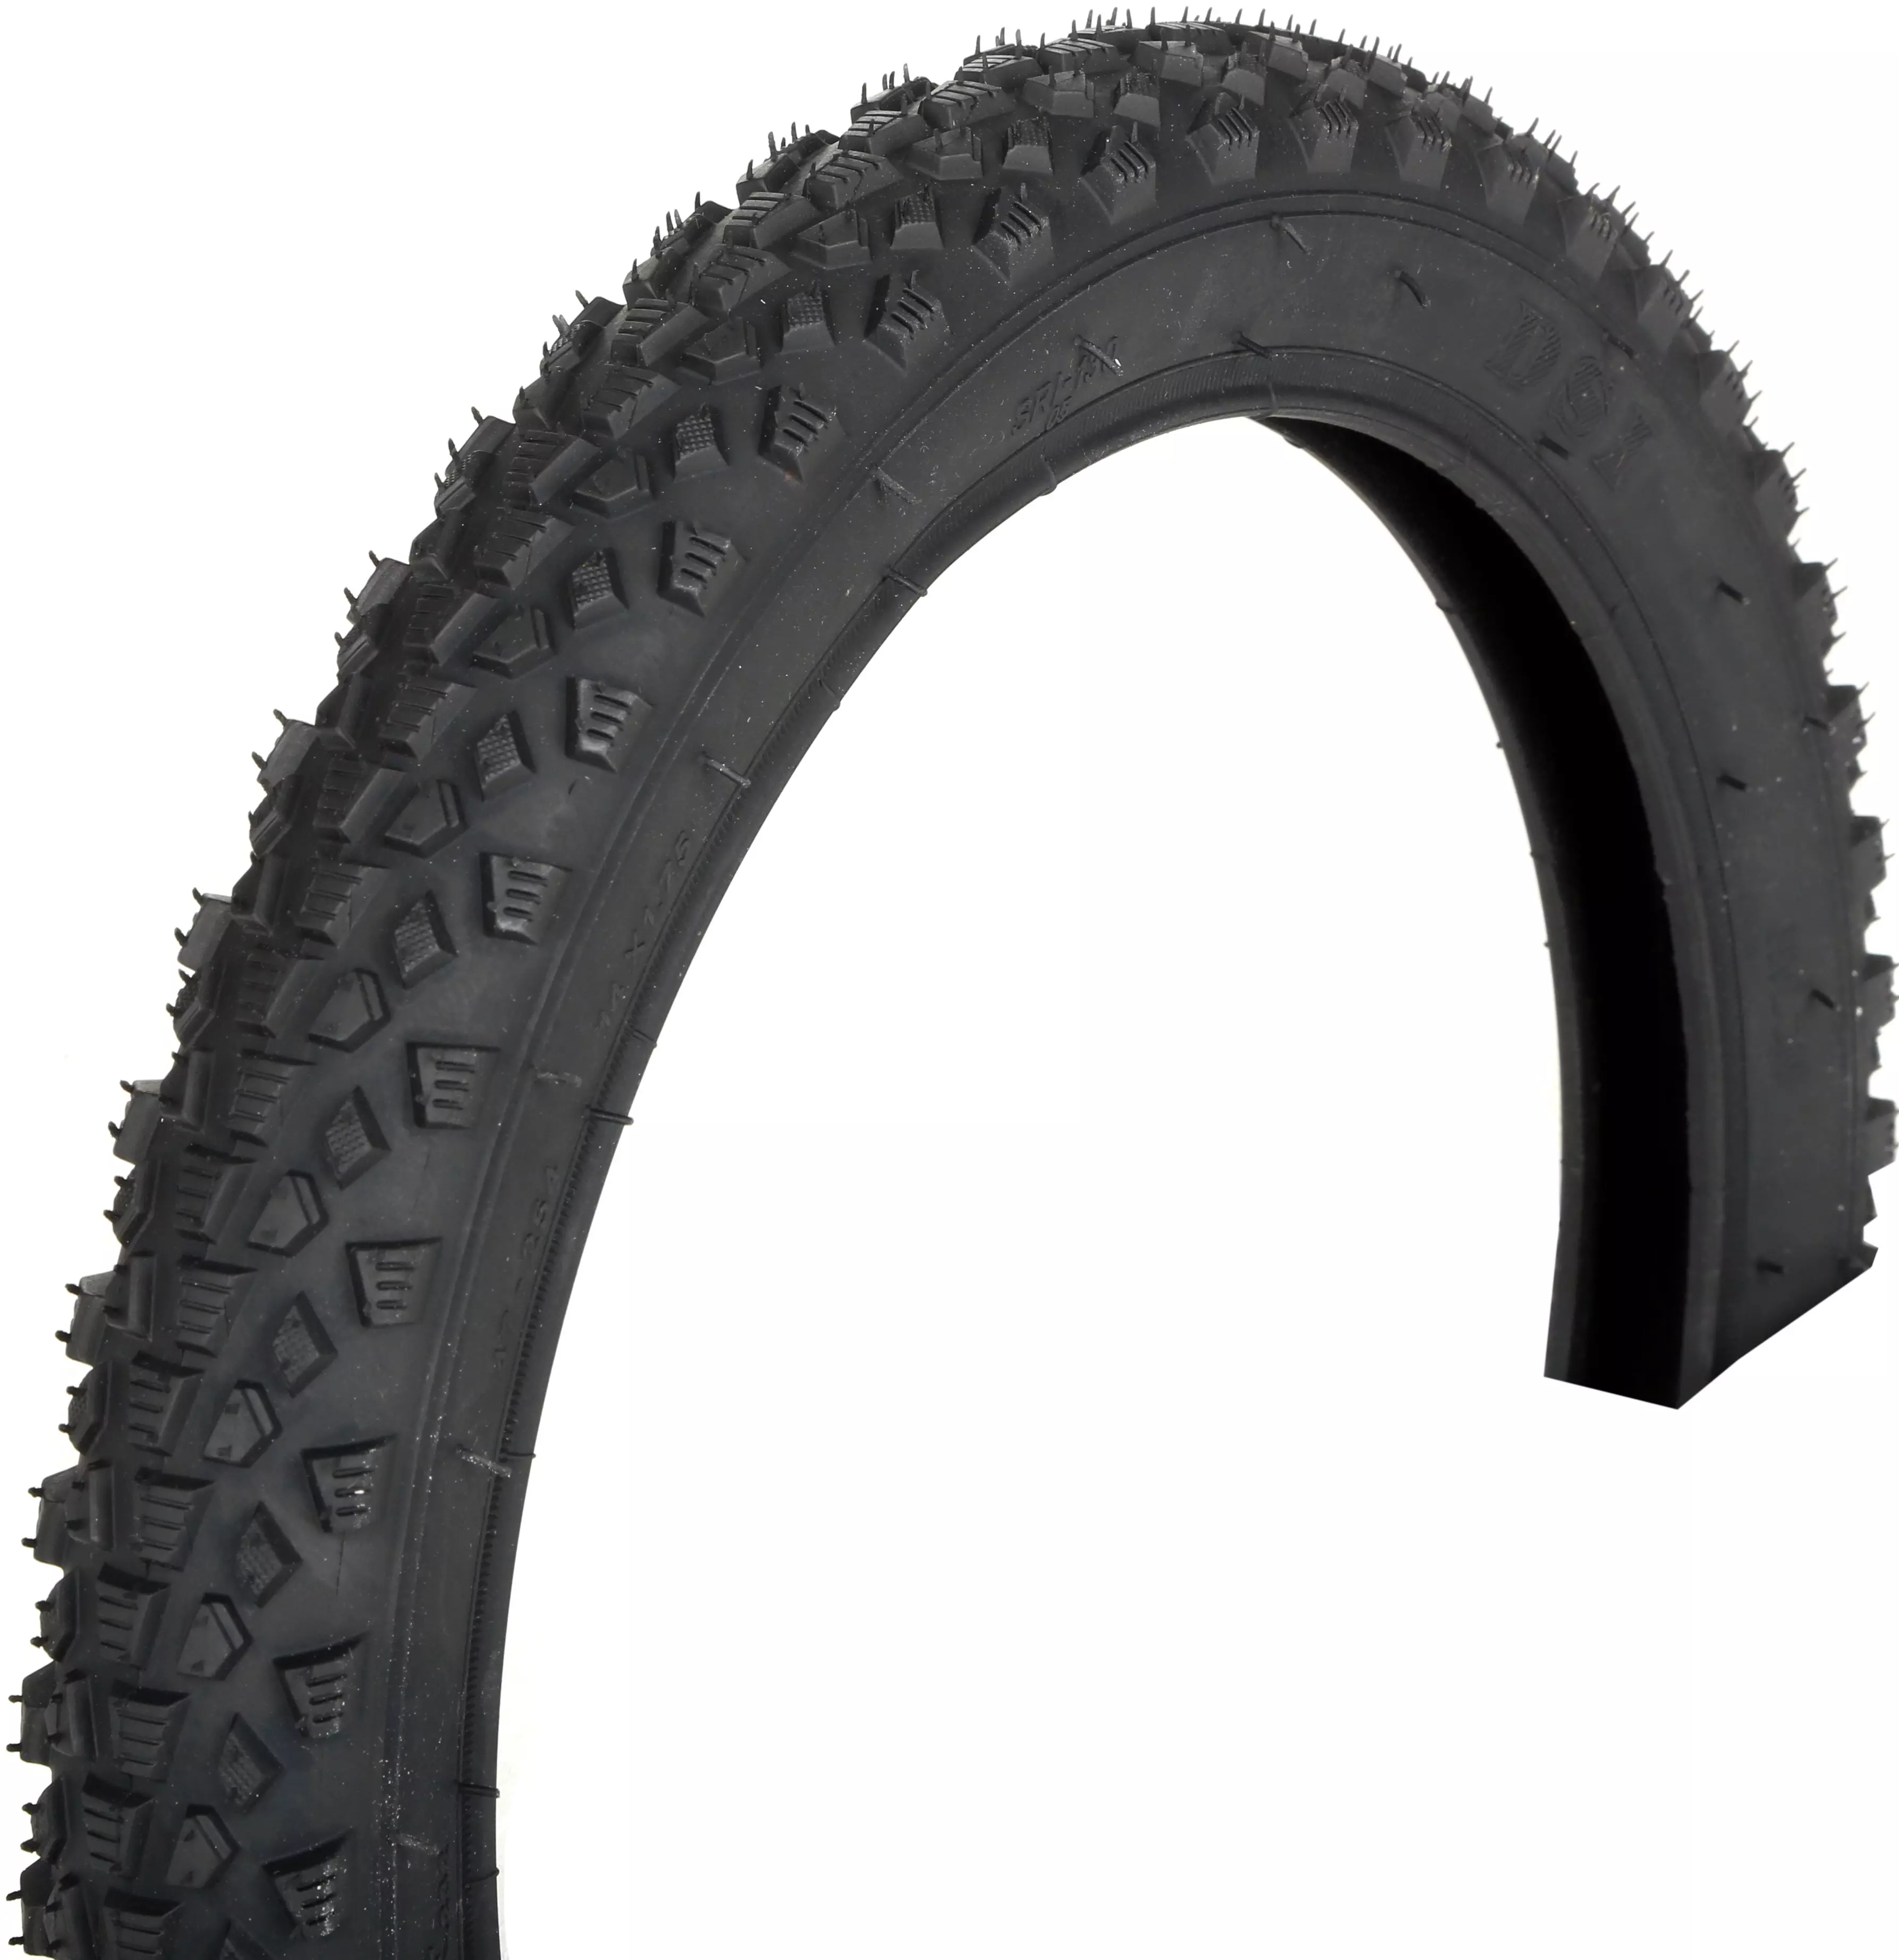 Halfords MTB Bike Tyre 14 x 1.75 